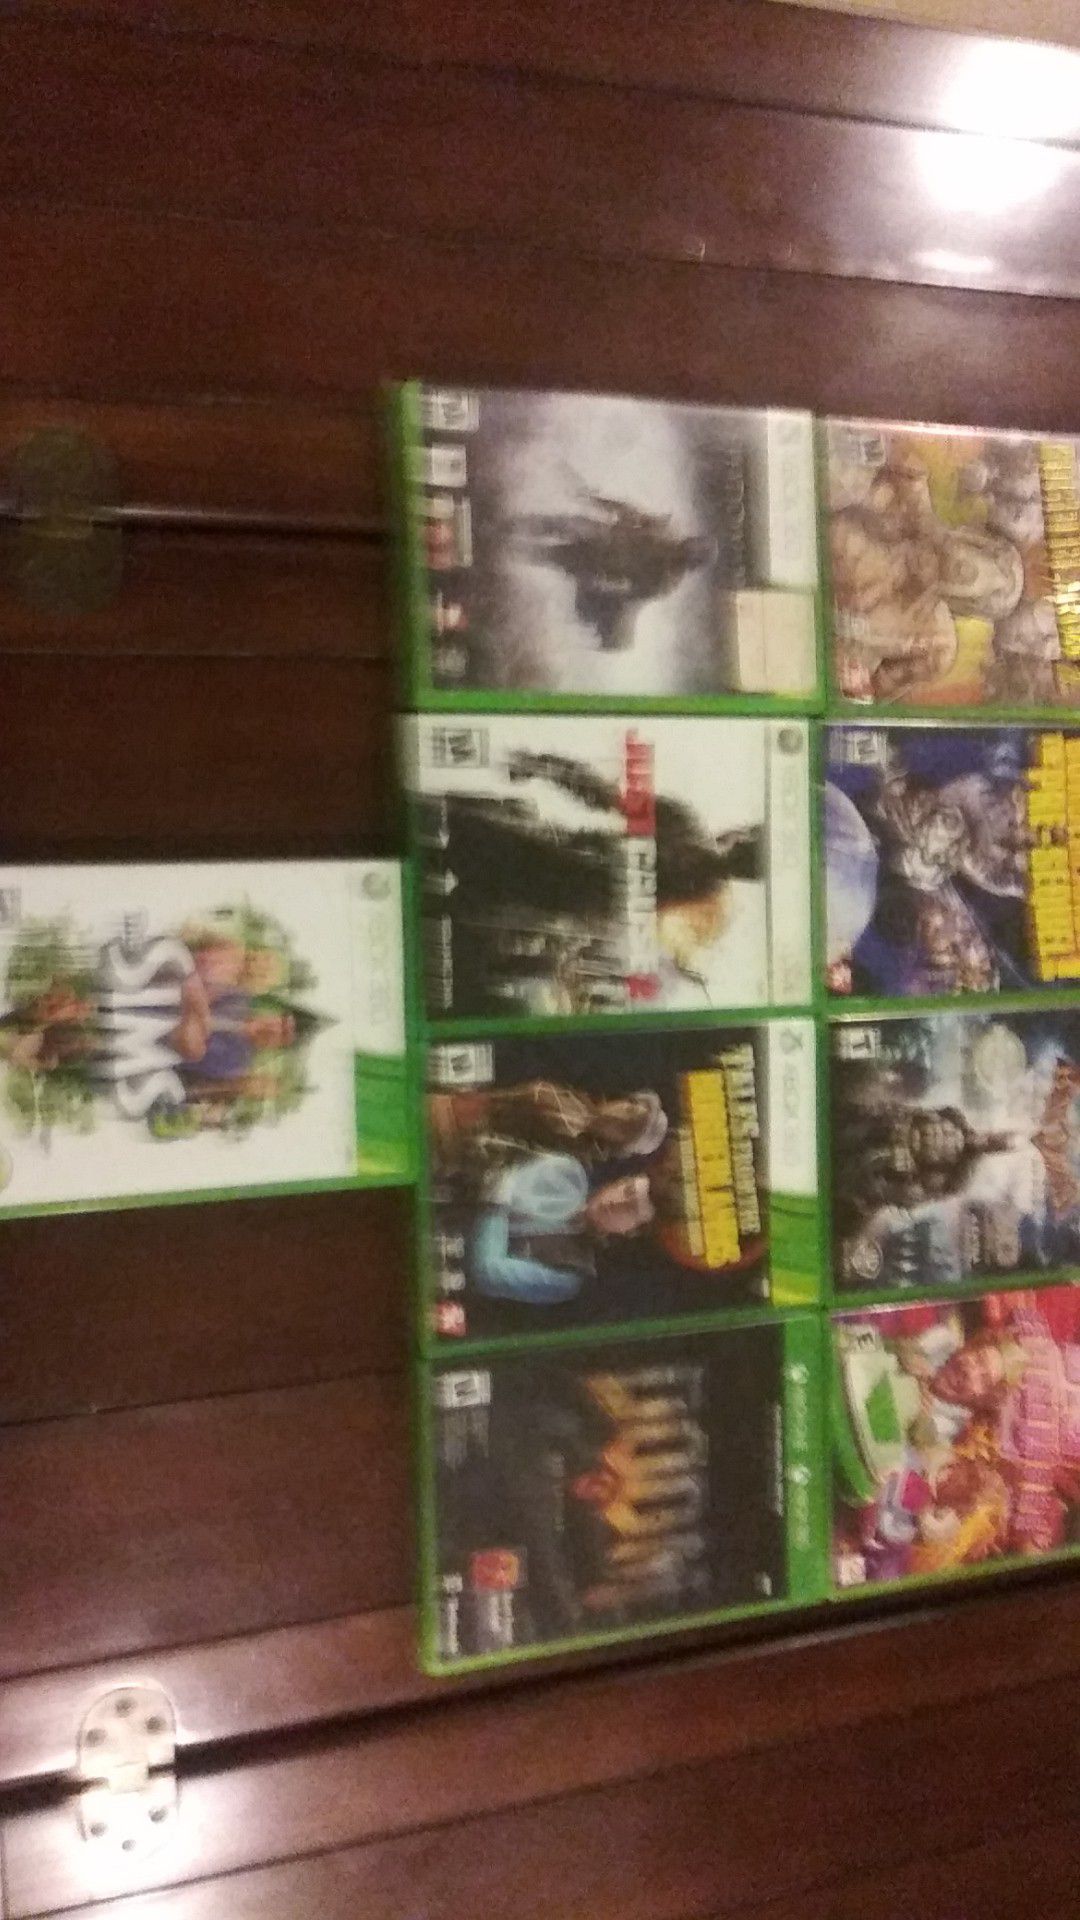 Xbox 360 game bundle